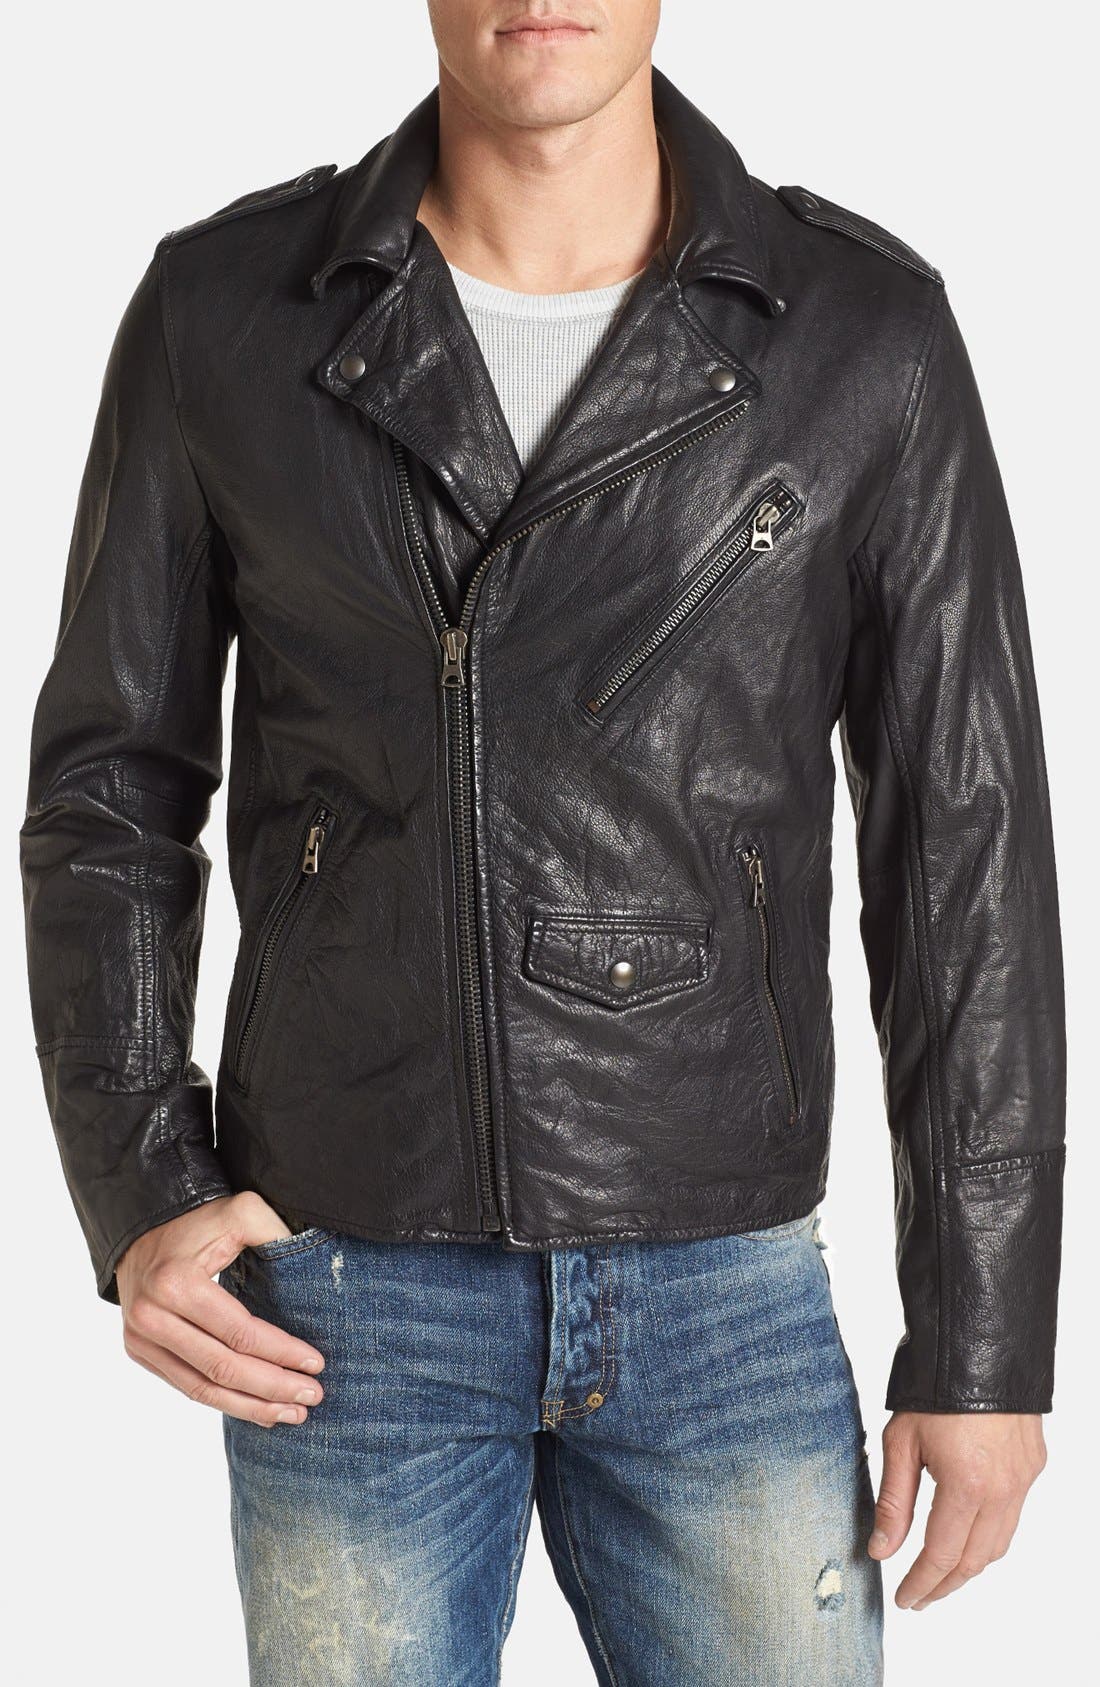 leather jacket levis